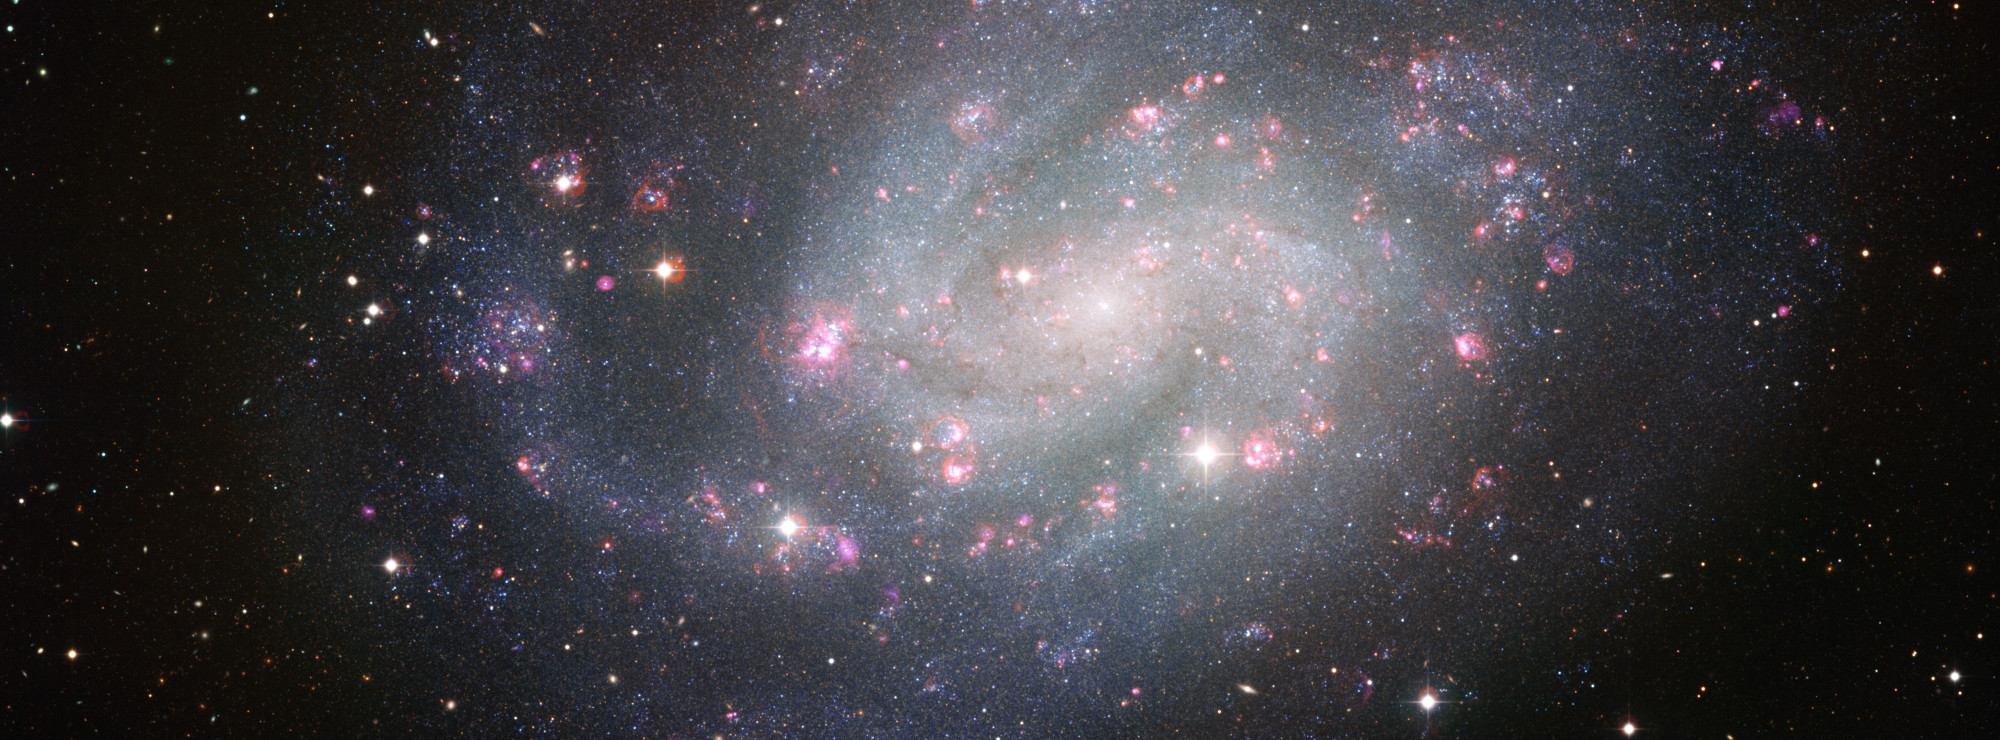 Spiral galaxy NGC 300. Credit: ESO.